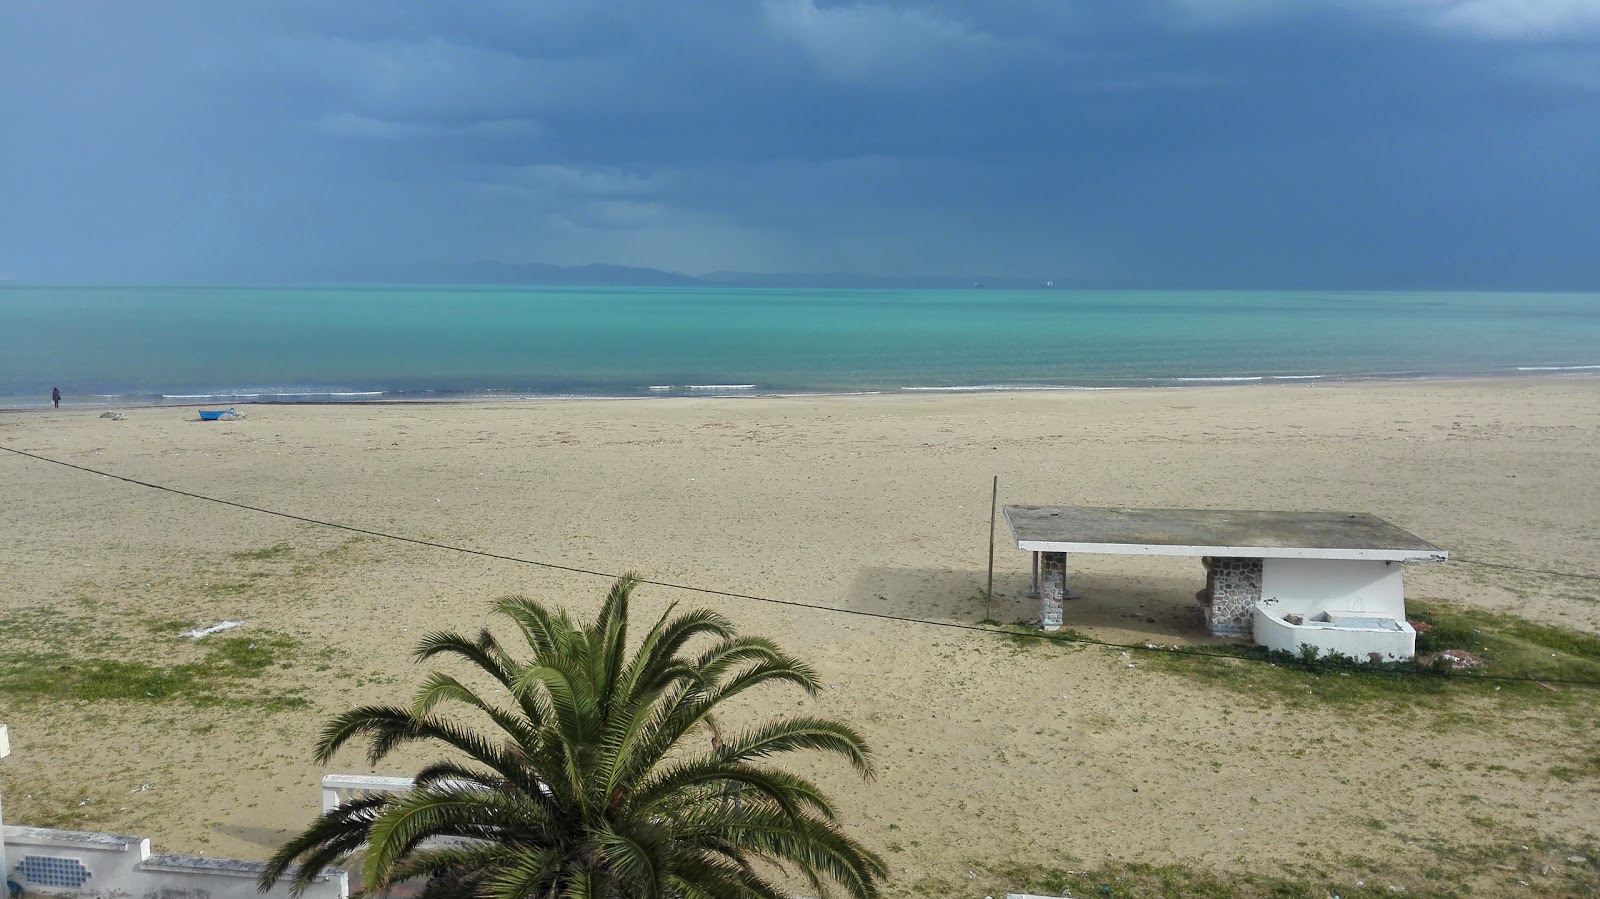 La Goulette plage'in fotoğrafı parlak kum yüzey ile